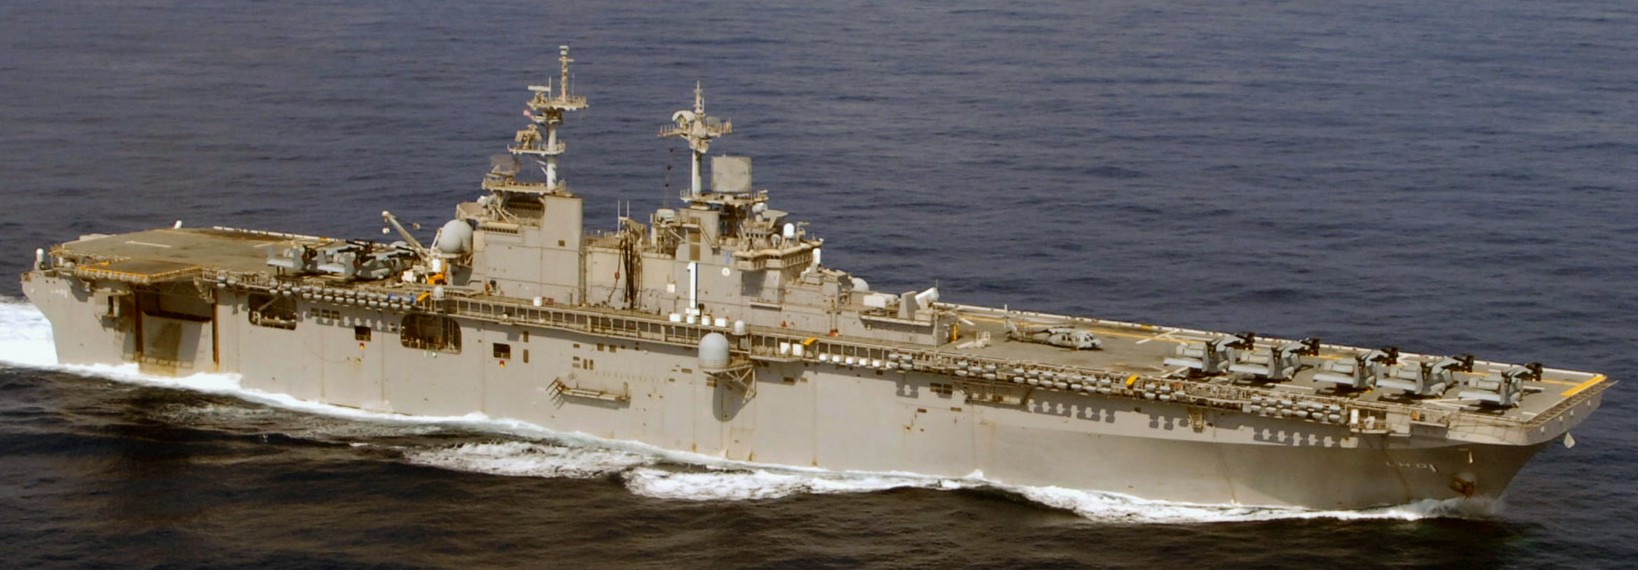 lhd-1 uss wasp amphibious assault landing ship dock helicopter us navy 111